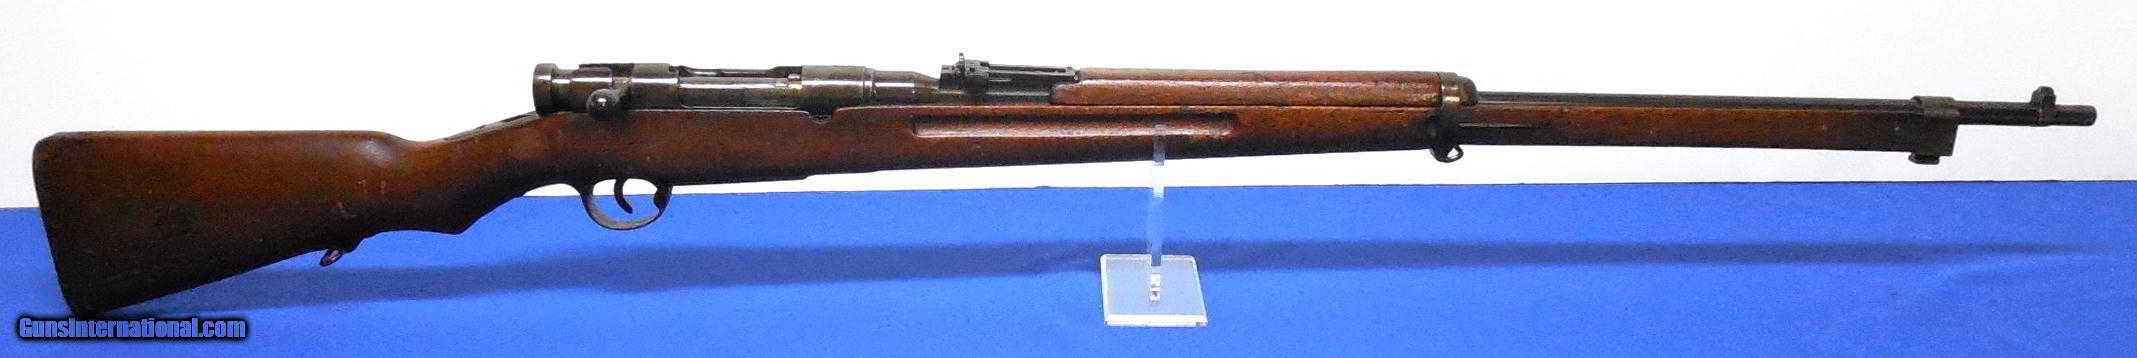 Тип 30 (винтовка) — википедия с видео // wiki 2